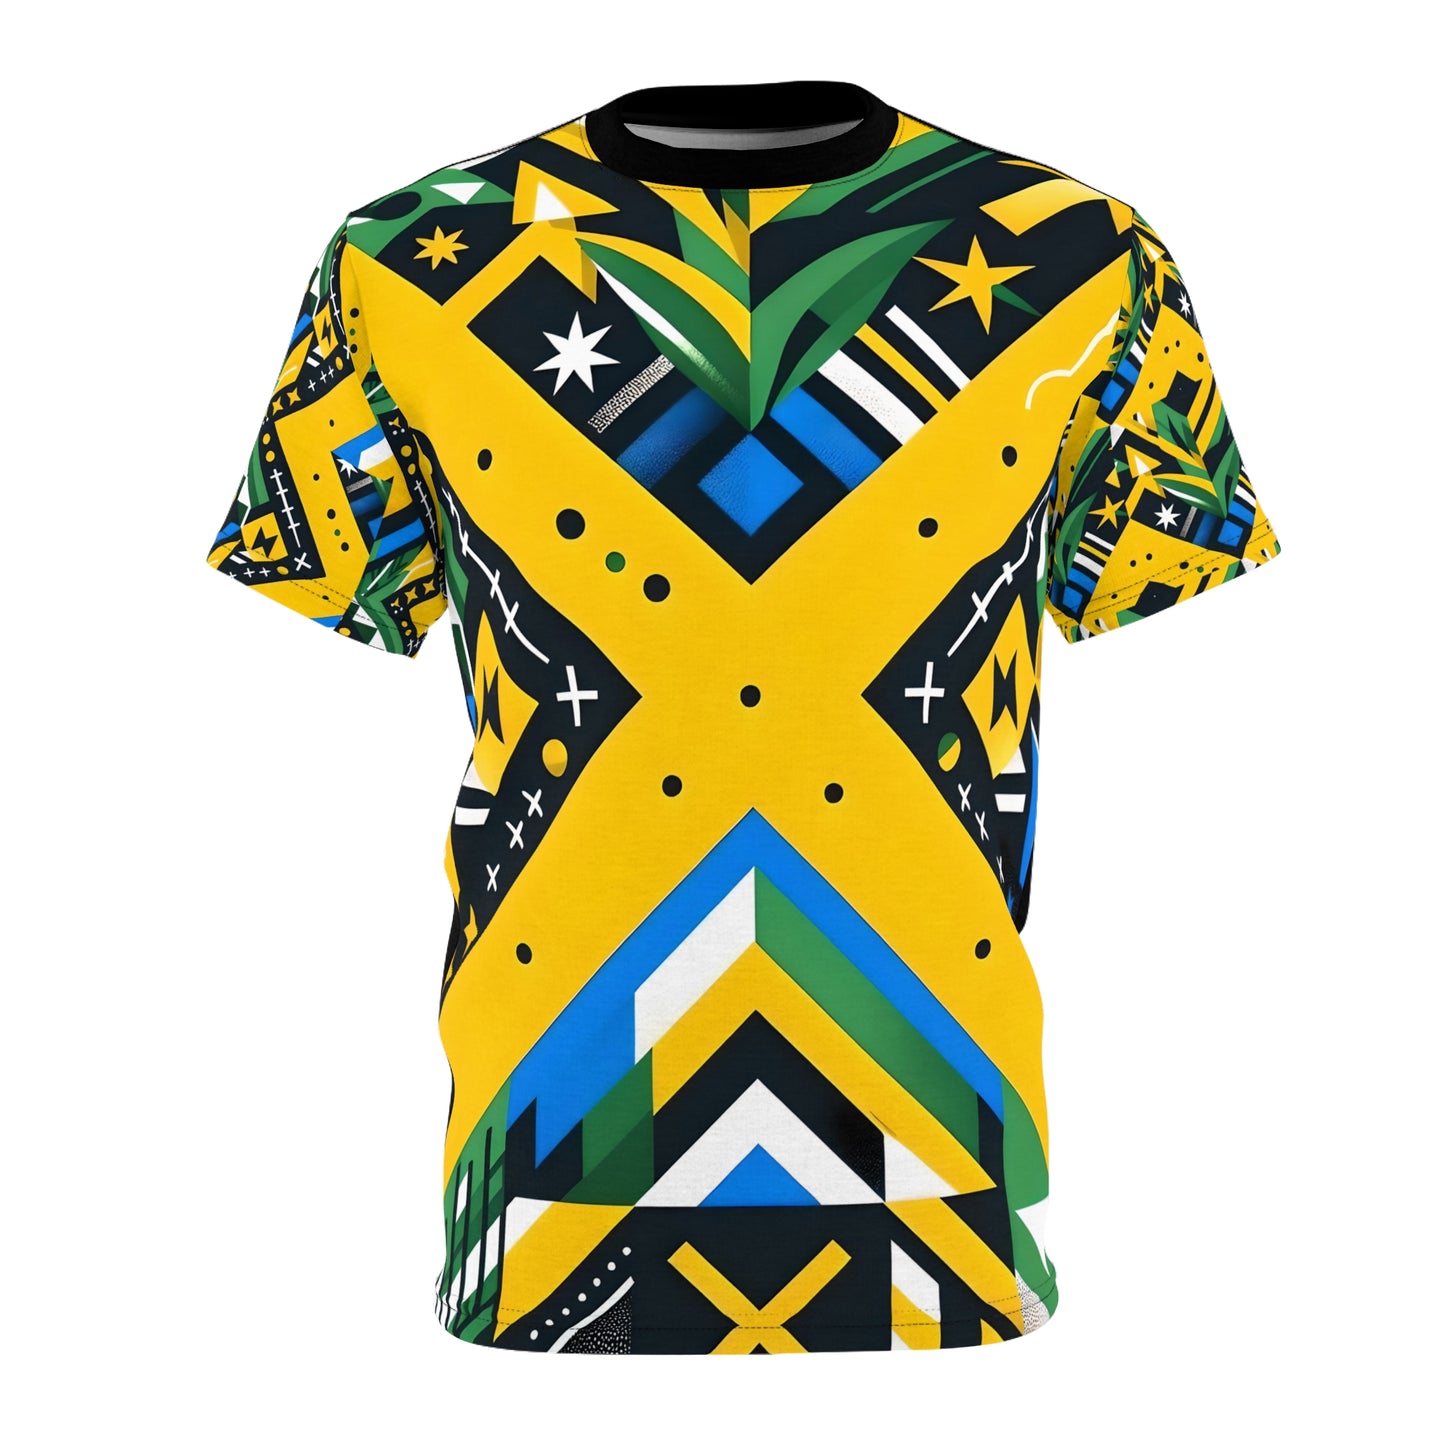 Jamaican Flag All-Over Print Shirt - Vibrant Caribbean Design